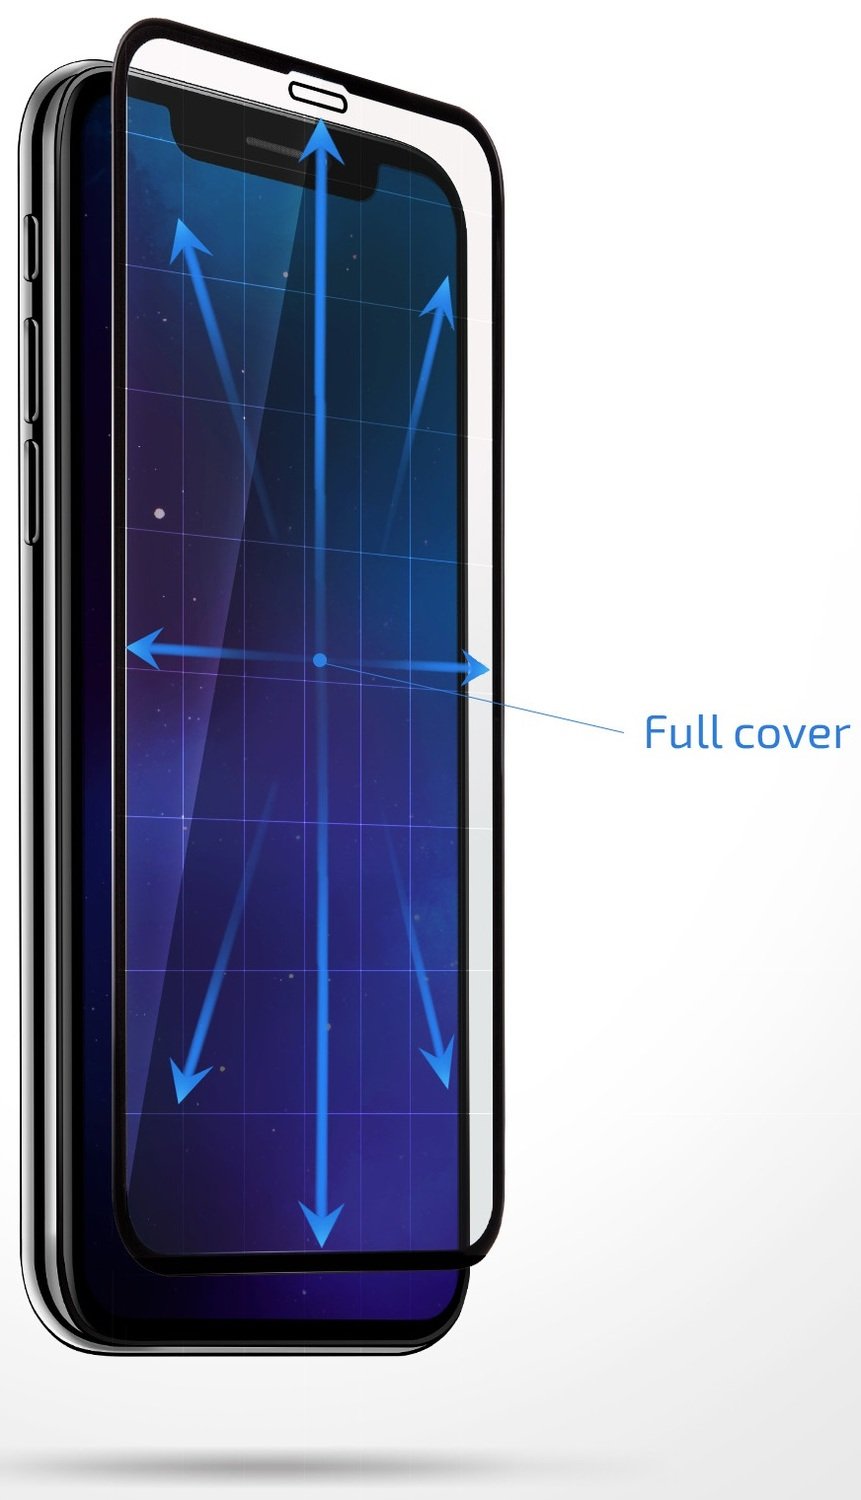 Комплект защитных стёкол 2E для Galaxy A72 (A725) 2.5D FCFG (2 Pack) Black border (2E-G-A72-LTFCFG-BB) фото 